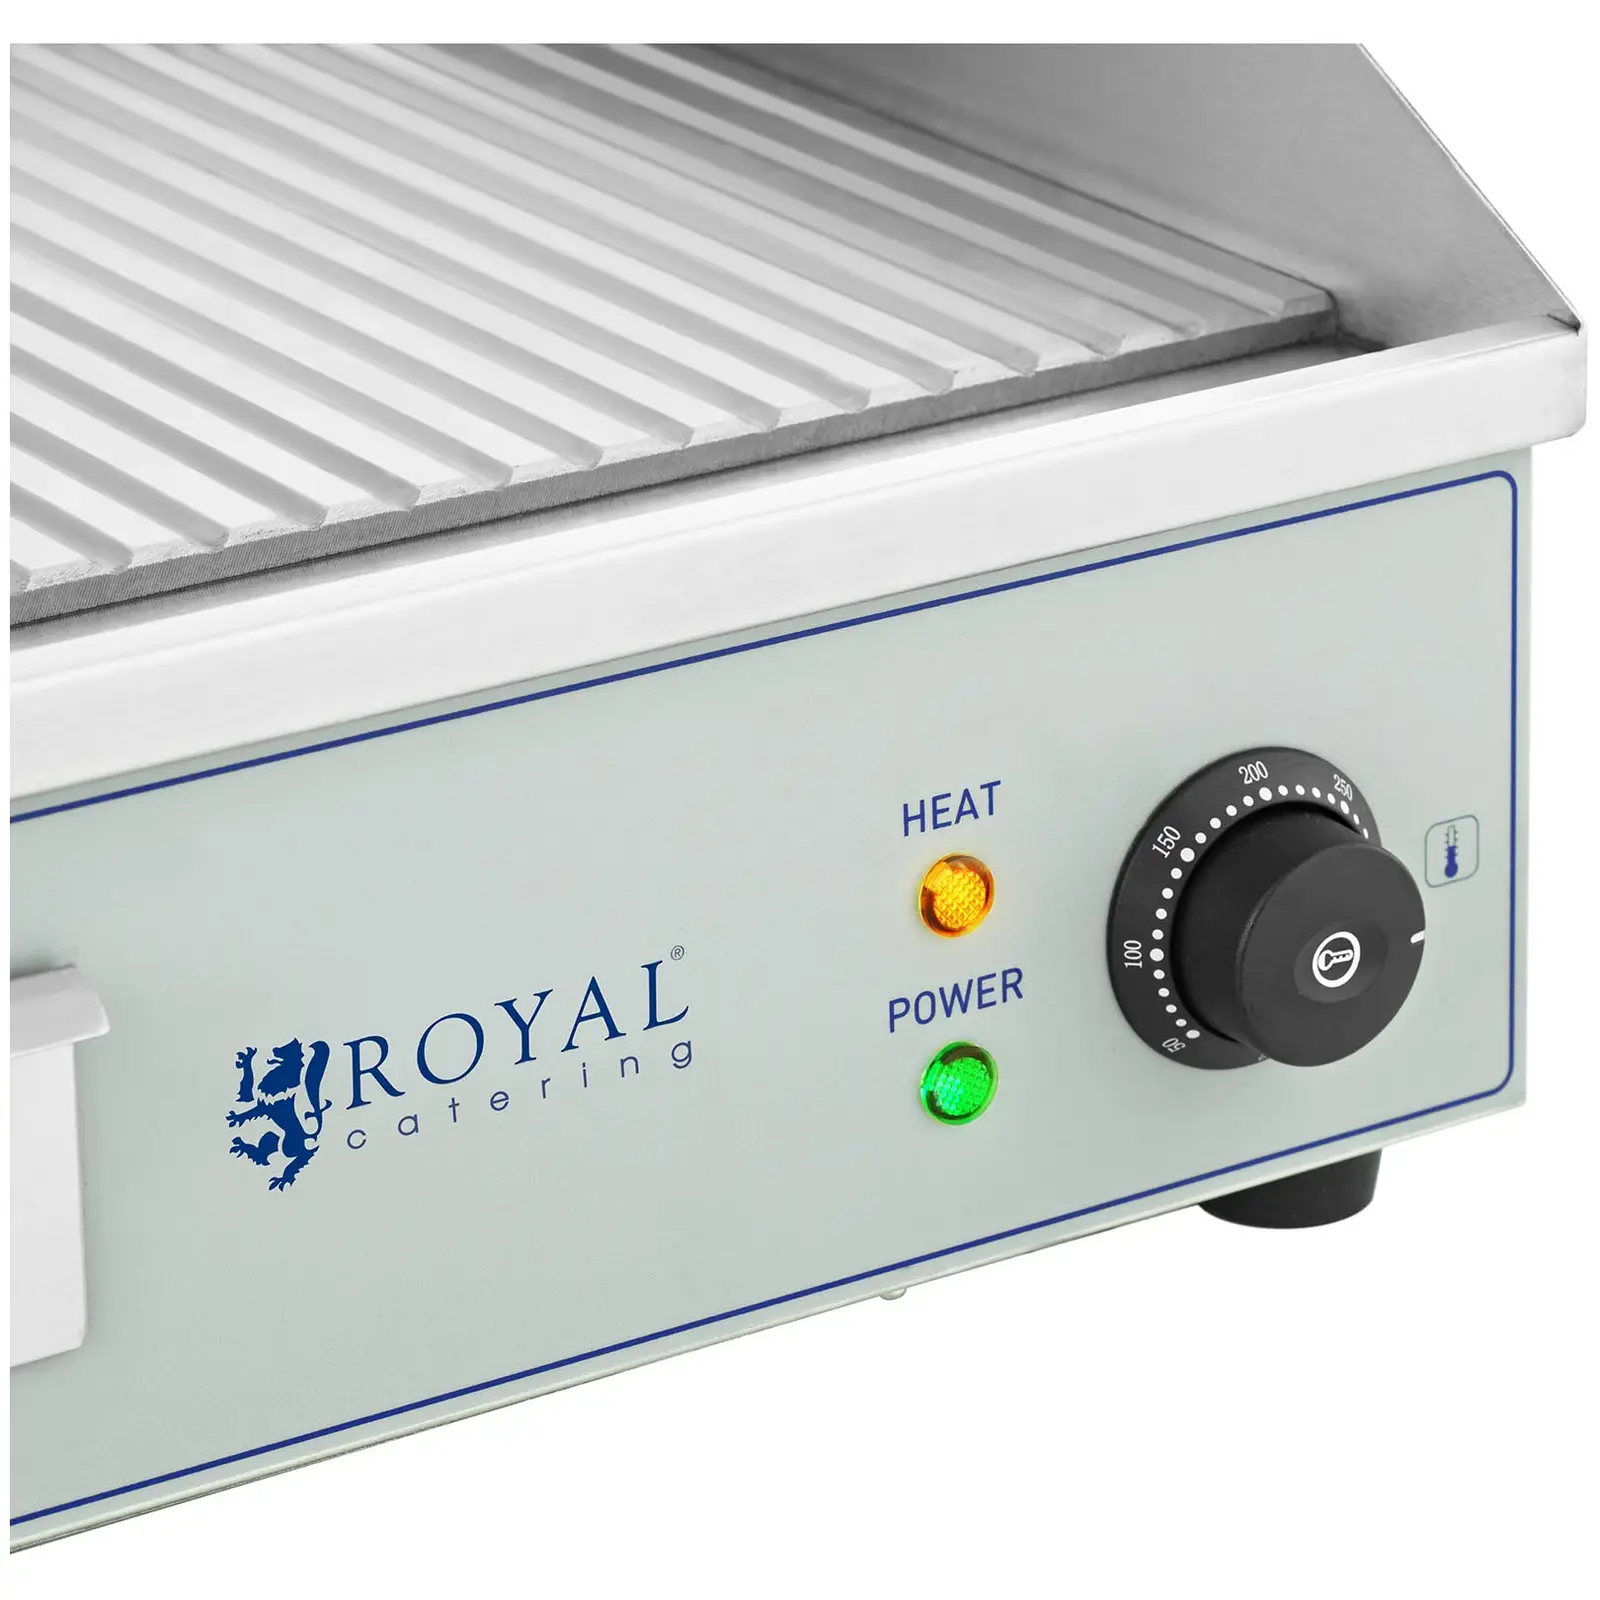 Dubbel - Elektrische grill - 400 x 730 mm - Royal Catering - 2 x 2,200 W